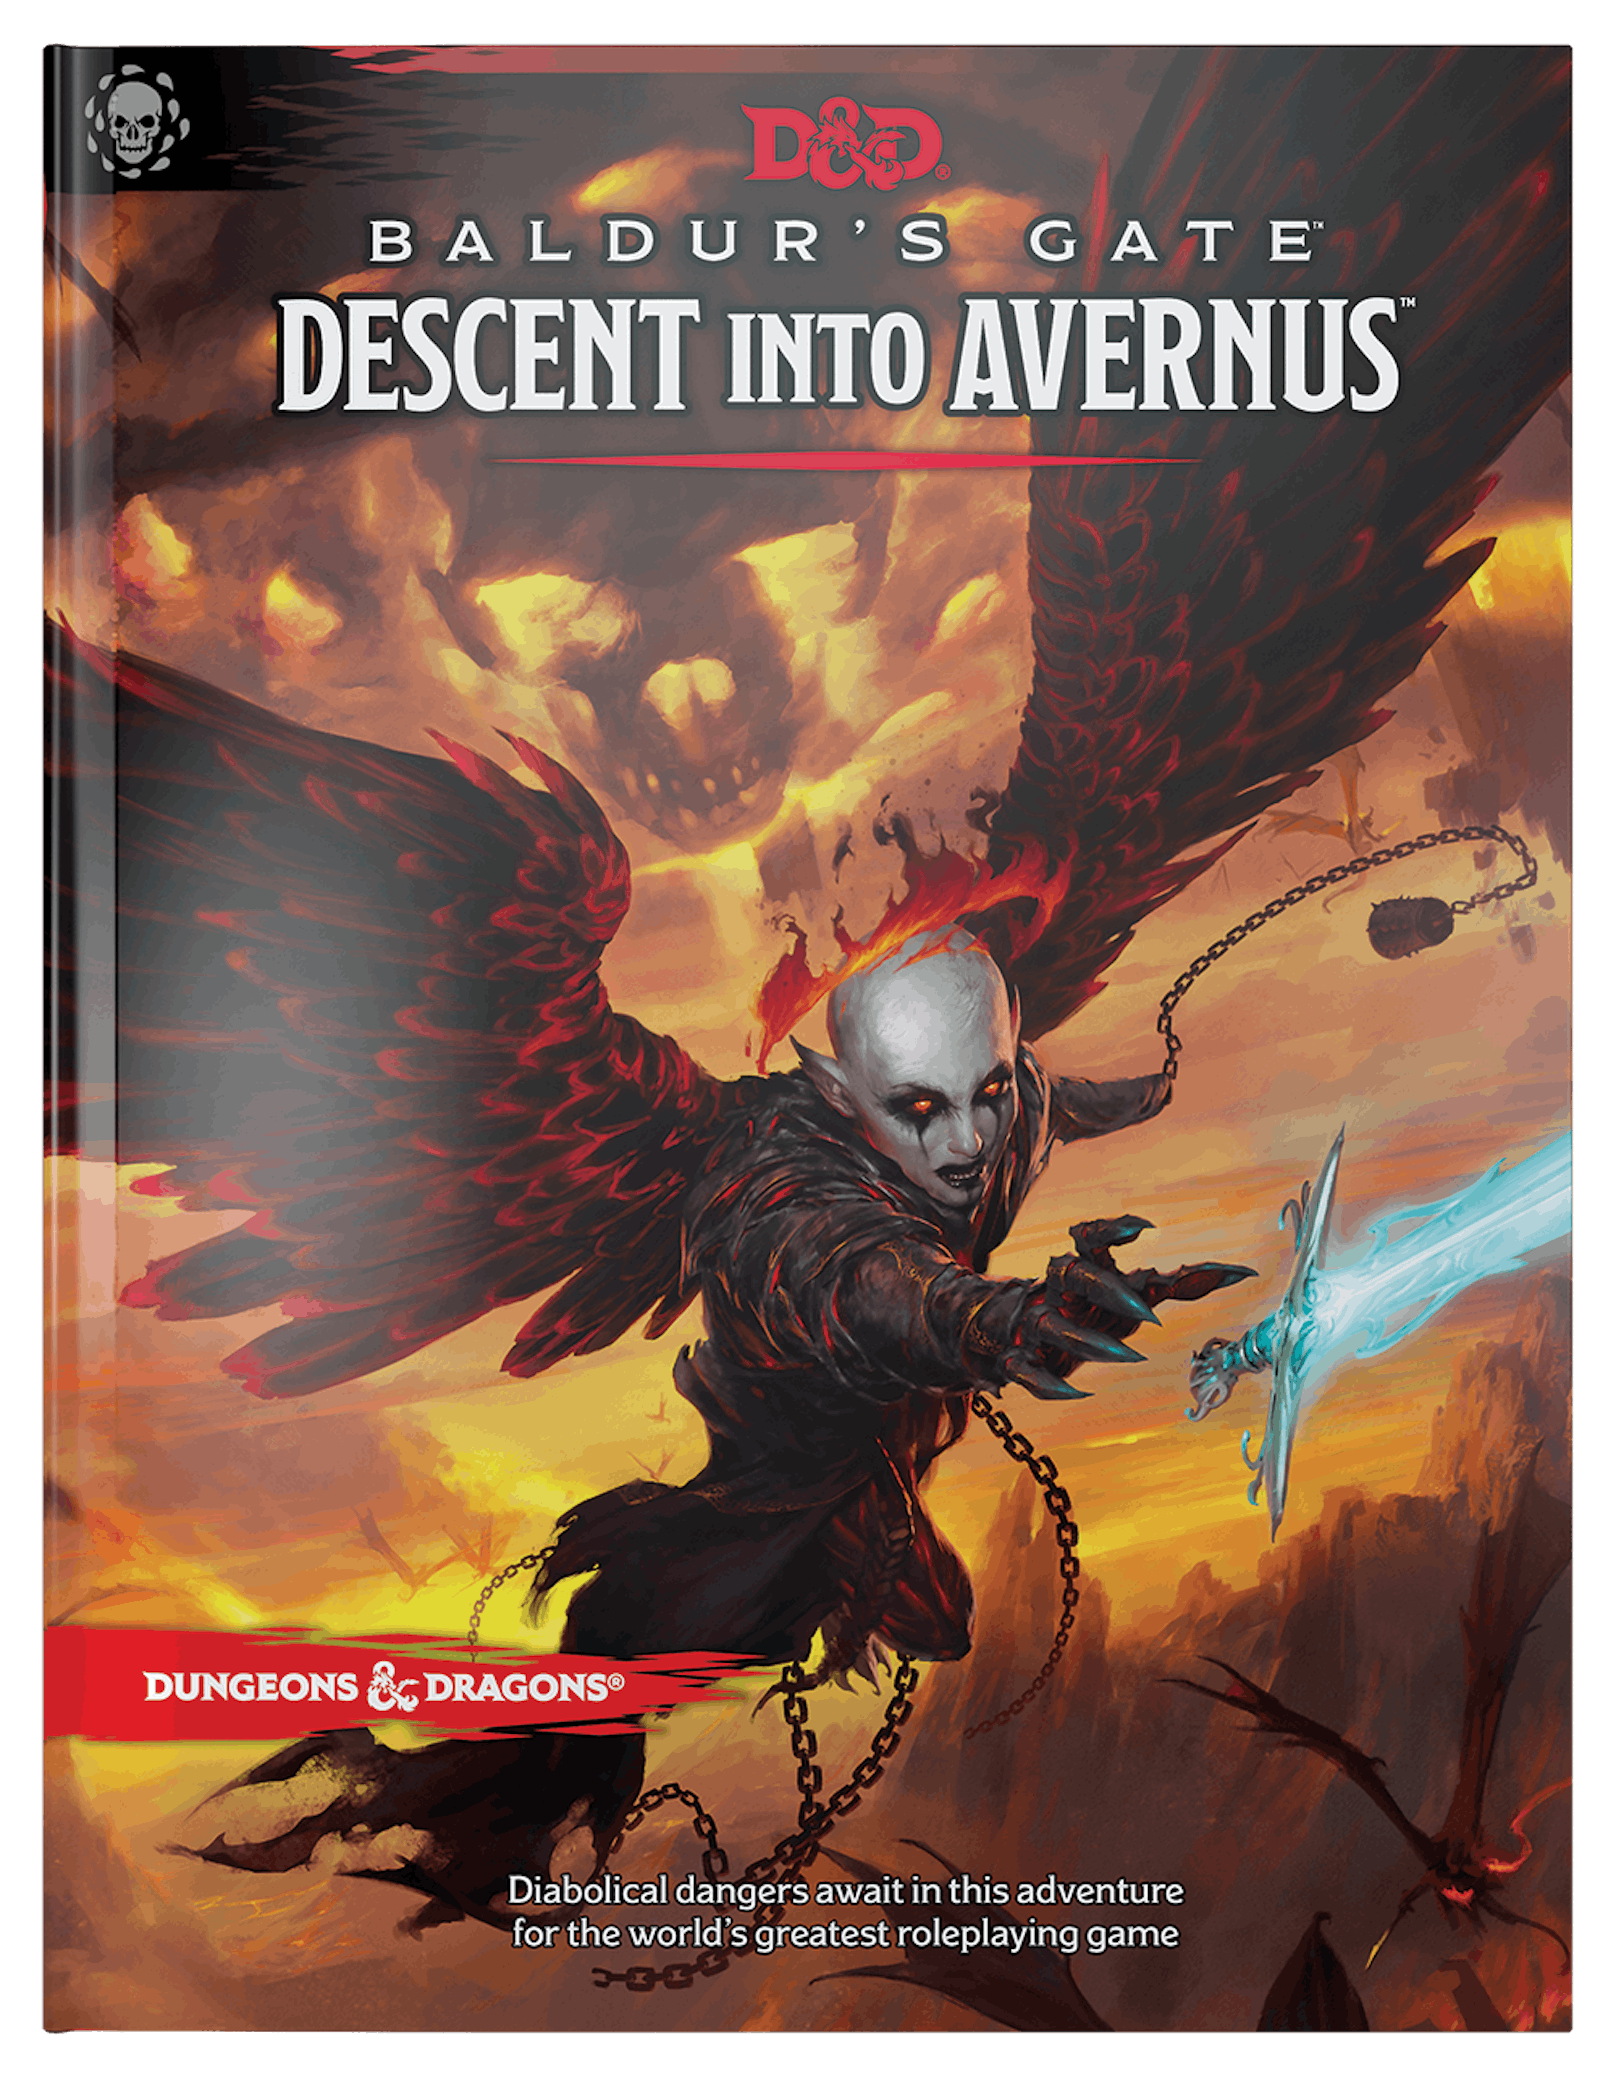 "Baldur's Gate: Descent into Avernus".